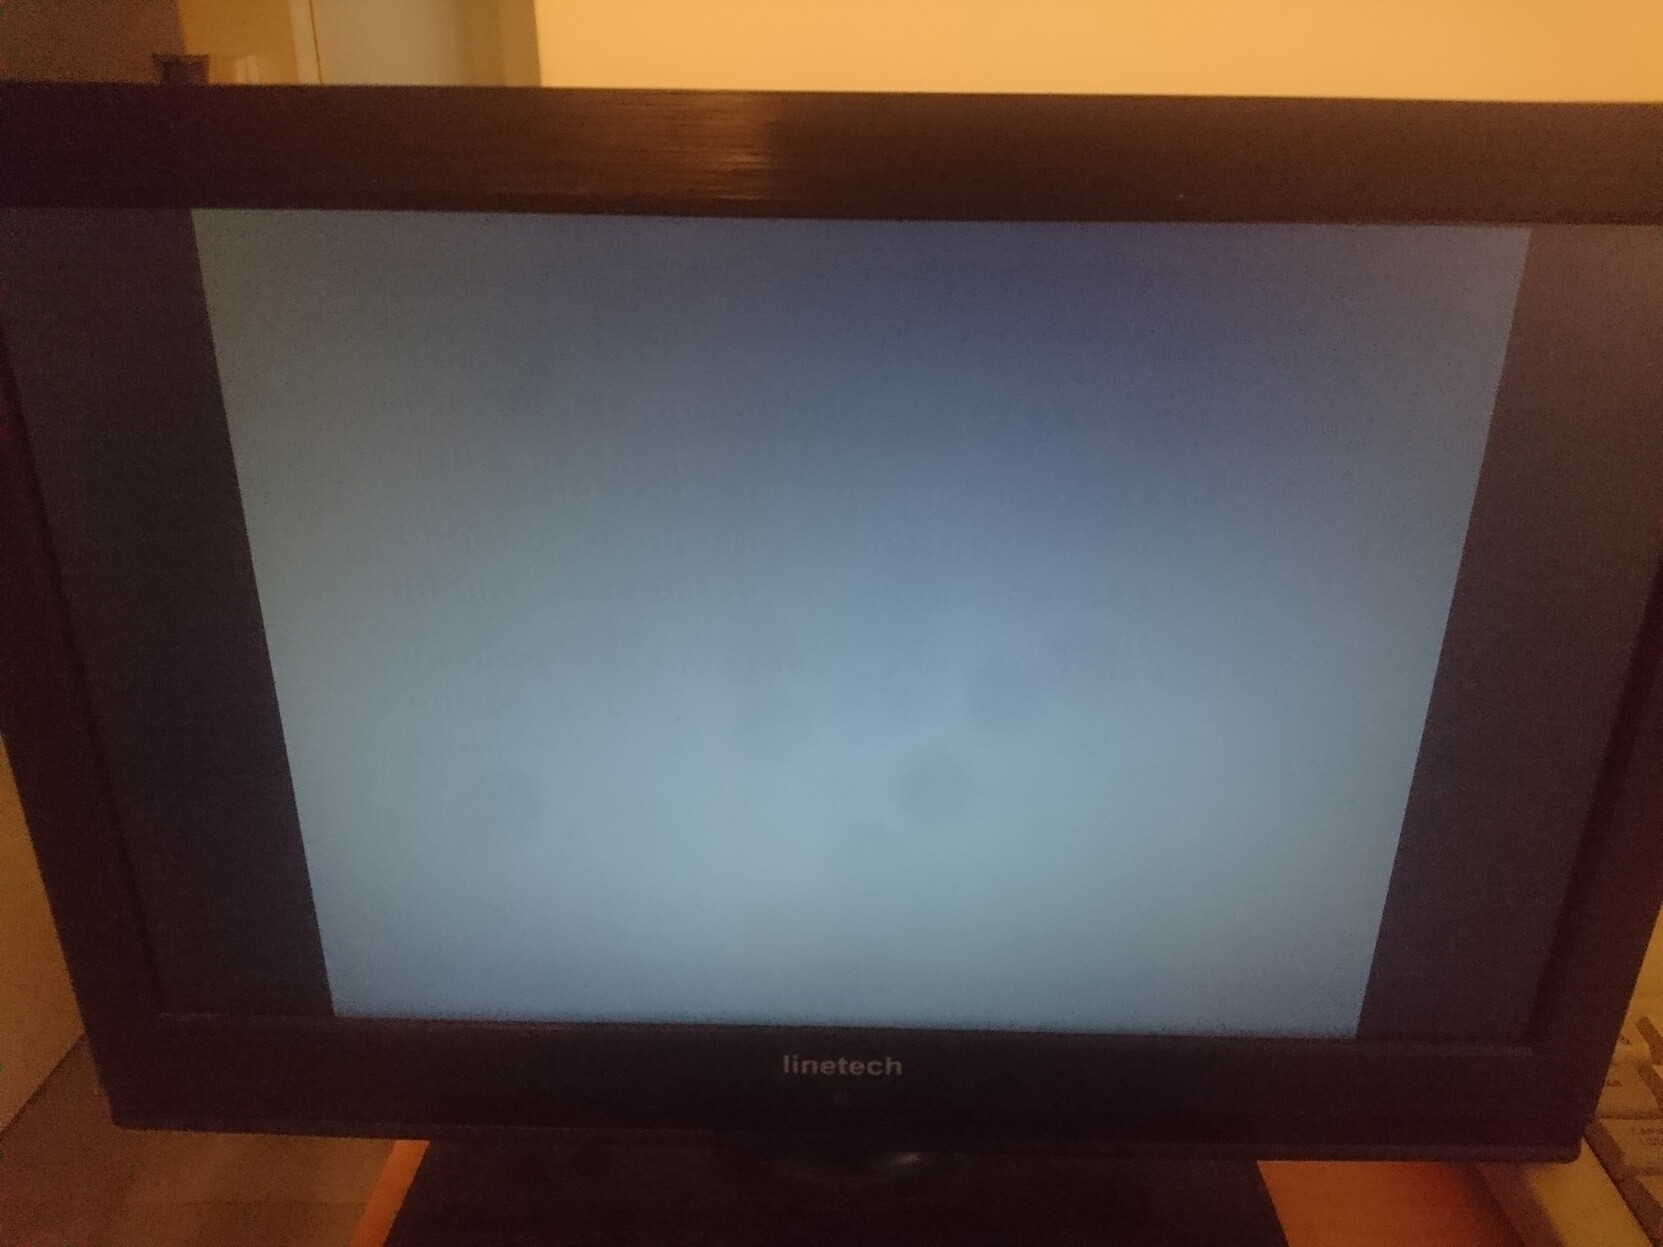 TV showing a grey screen